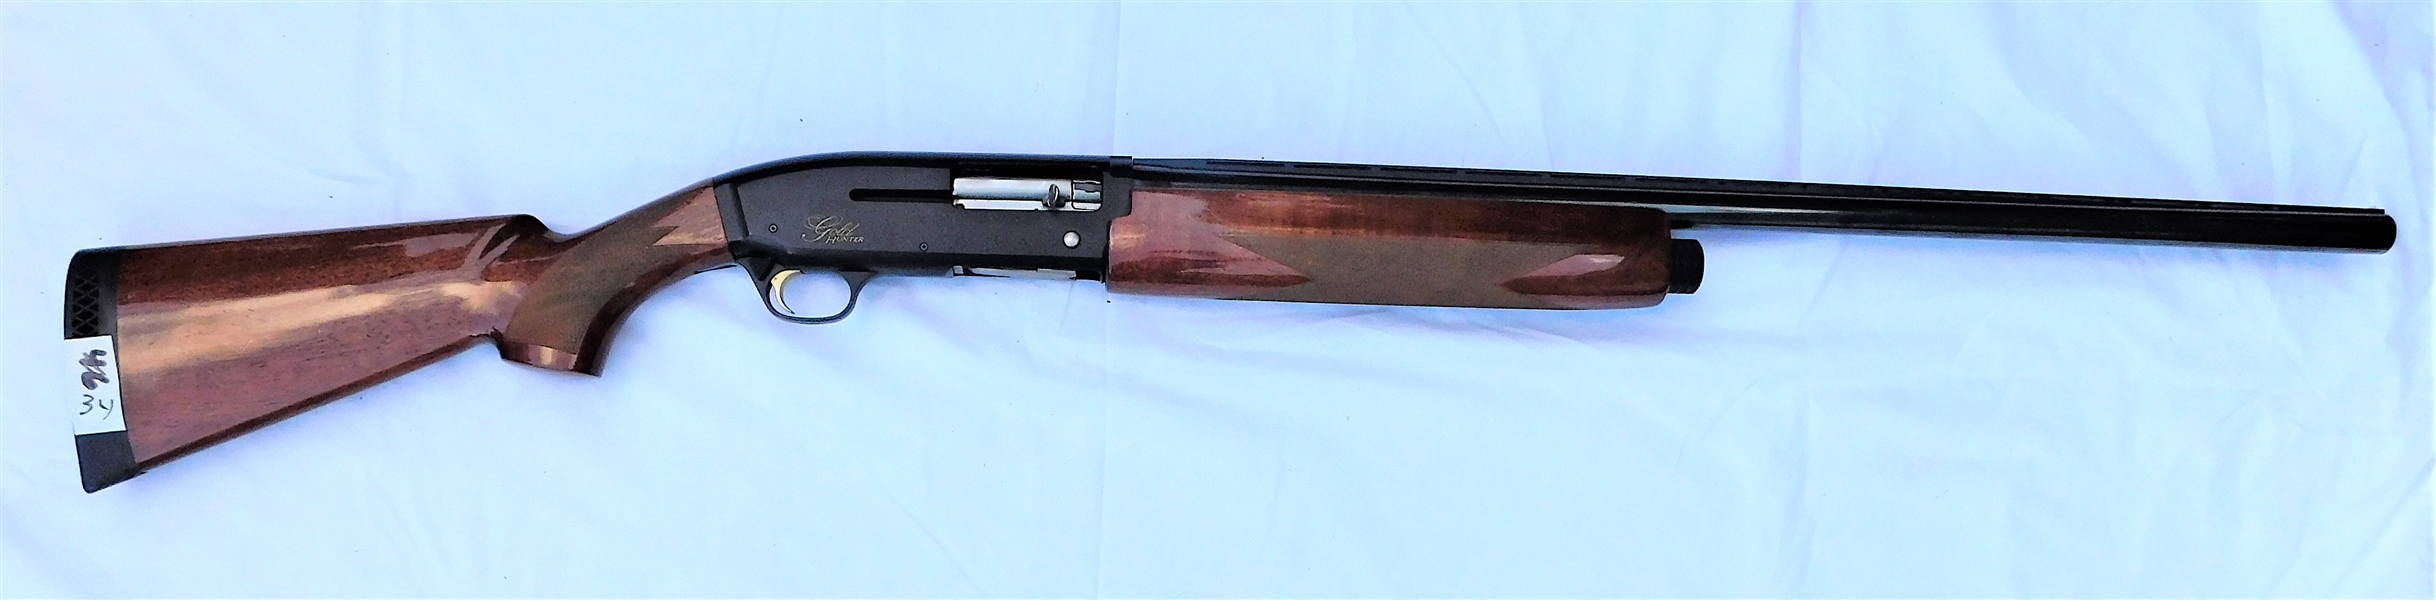 Browning Belgium "Gold Hunter" 12 Gauge Shotgun - Model Gold - Ventilated Rib - Invector Plus - 2 3/4" & 3" - Like New